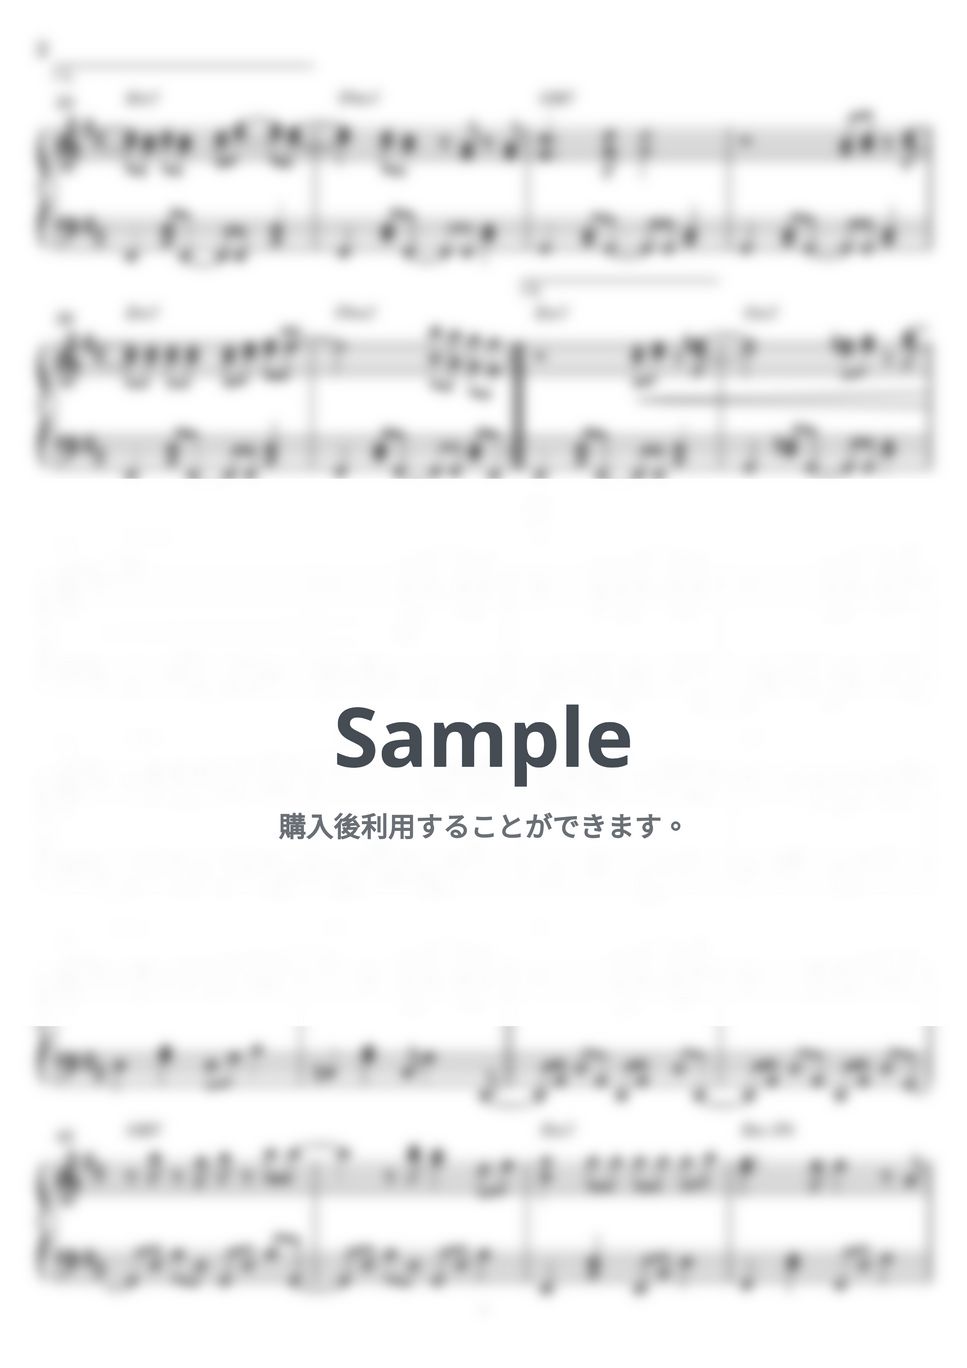 Official髭男dism - SOULSOUP 『劇場版 SPY×FAMILY CODE: White』主題歌 (ピアノソロ) by Miz